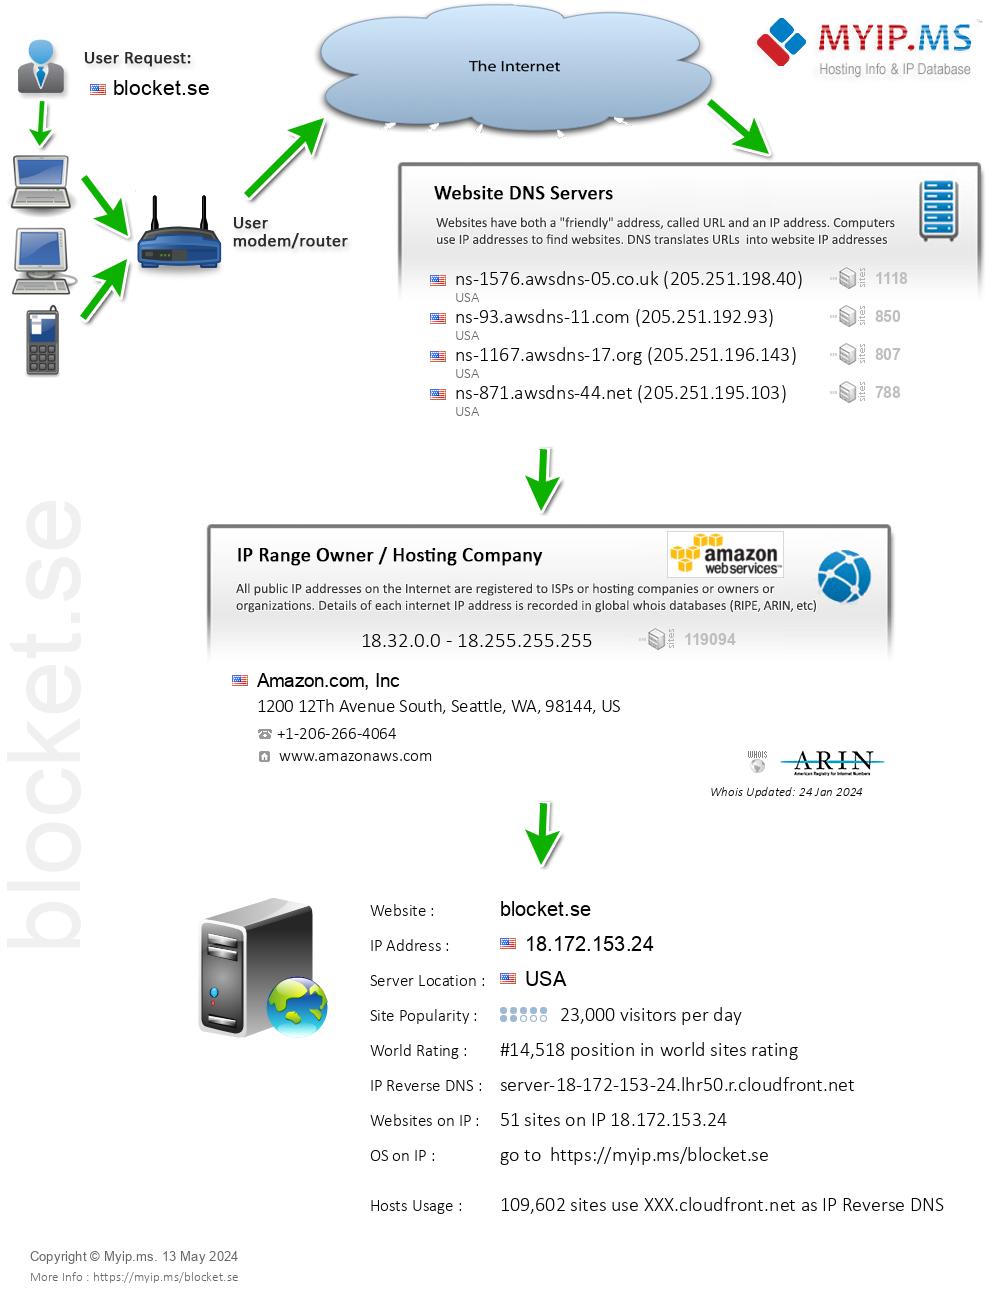 Blocket.se - Website Hosting Visual IP Diagram